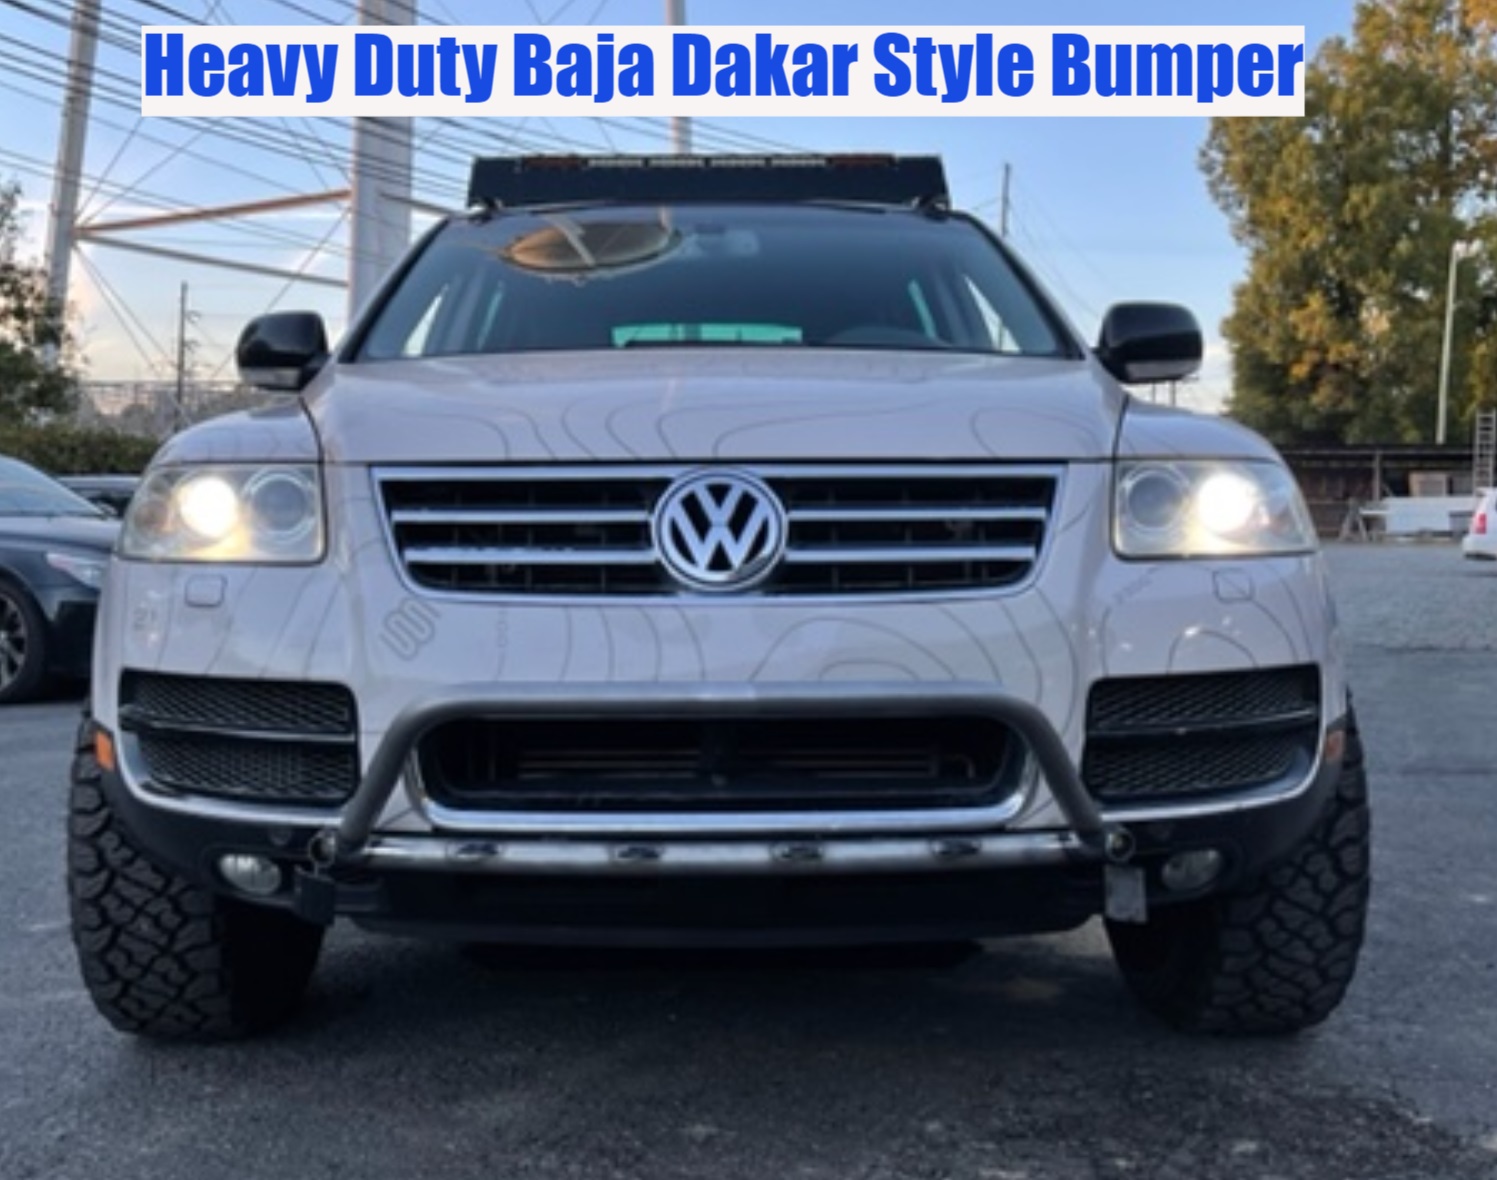 Custom Welded Baja Dakar Style Bumper for VW Touareg Porsche Cayenne Audi Q7.